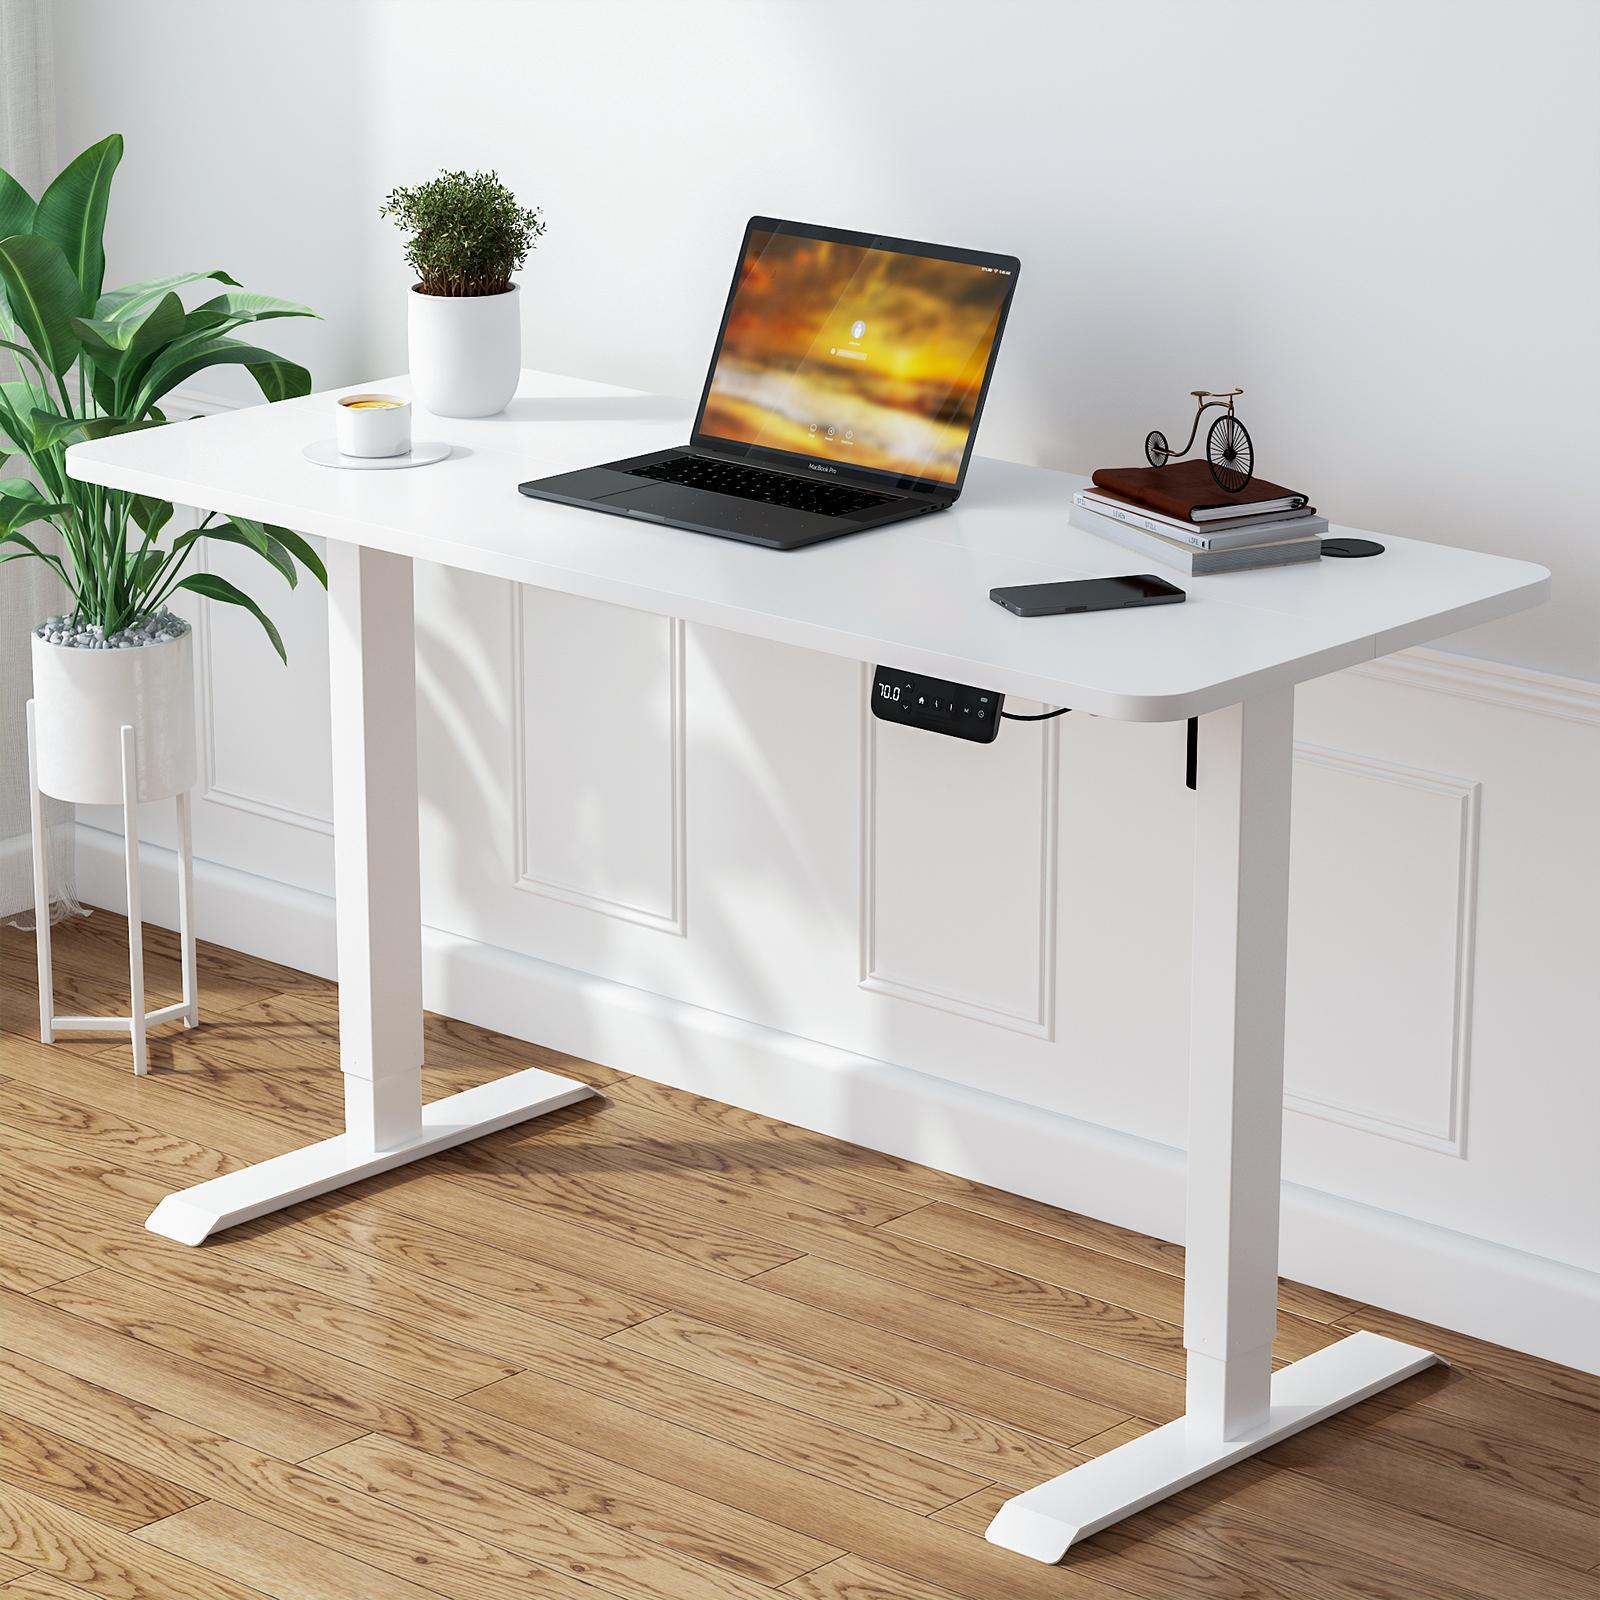 Advwin Electric Standing Desk White